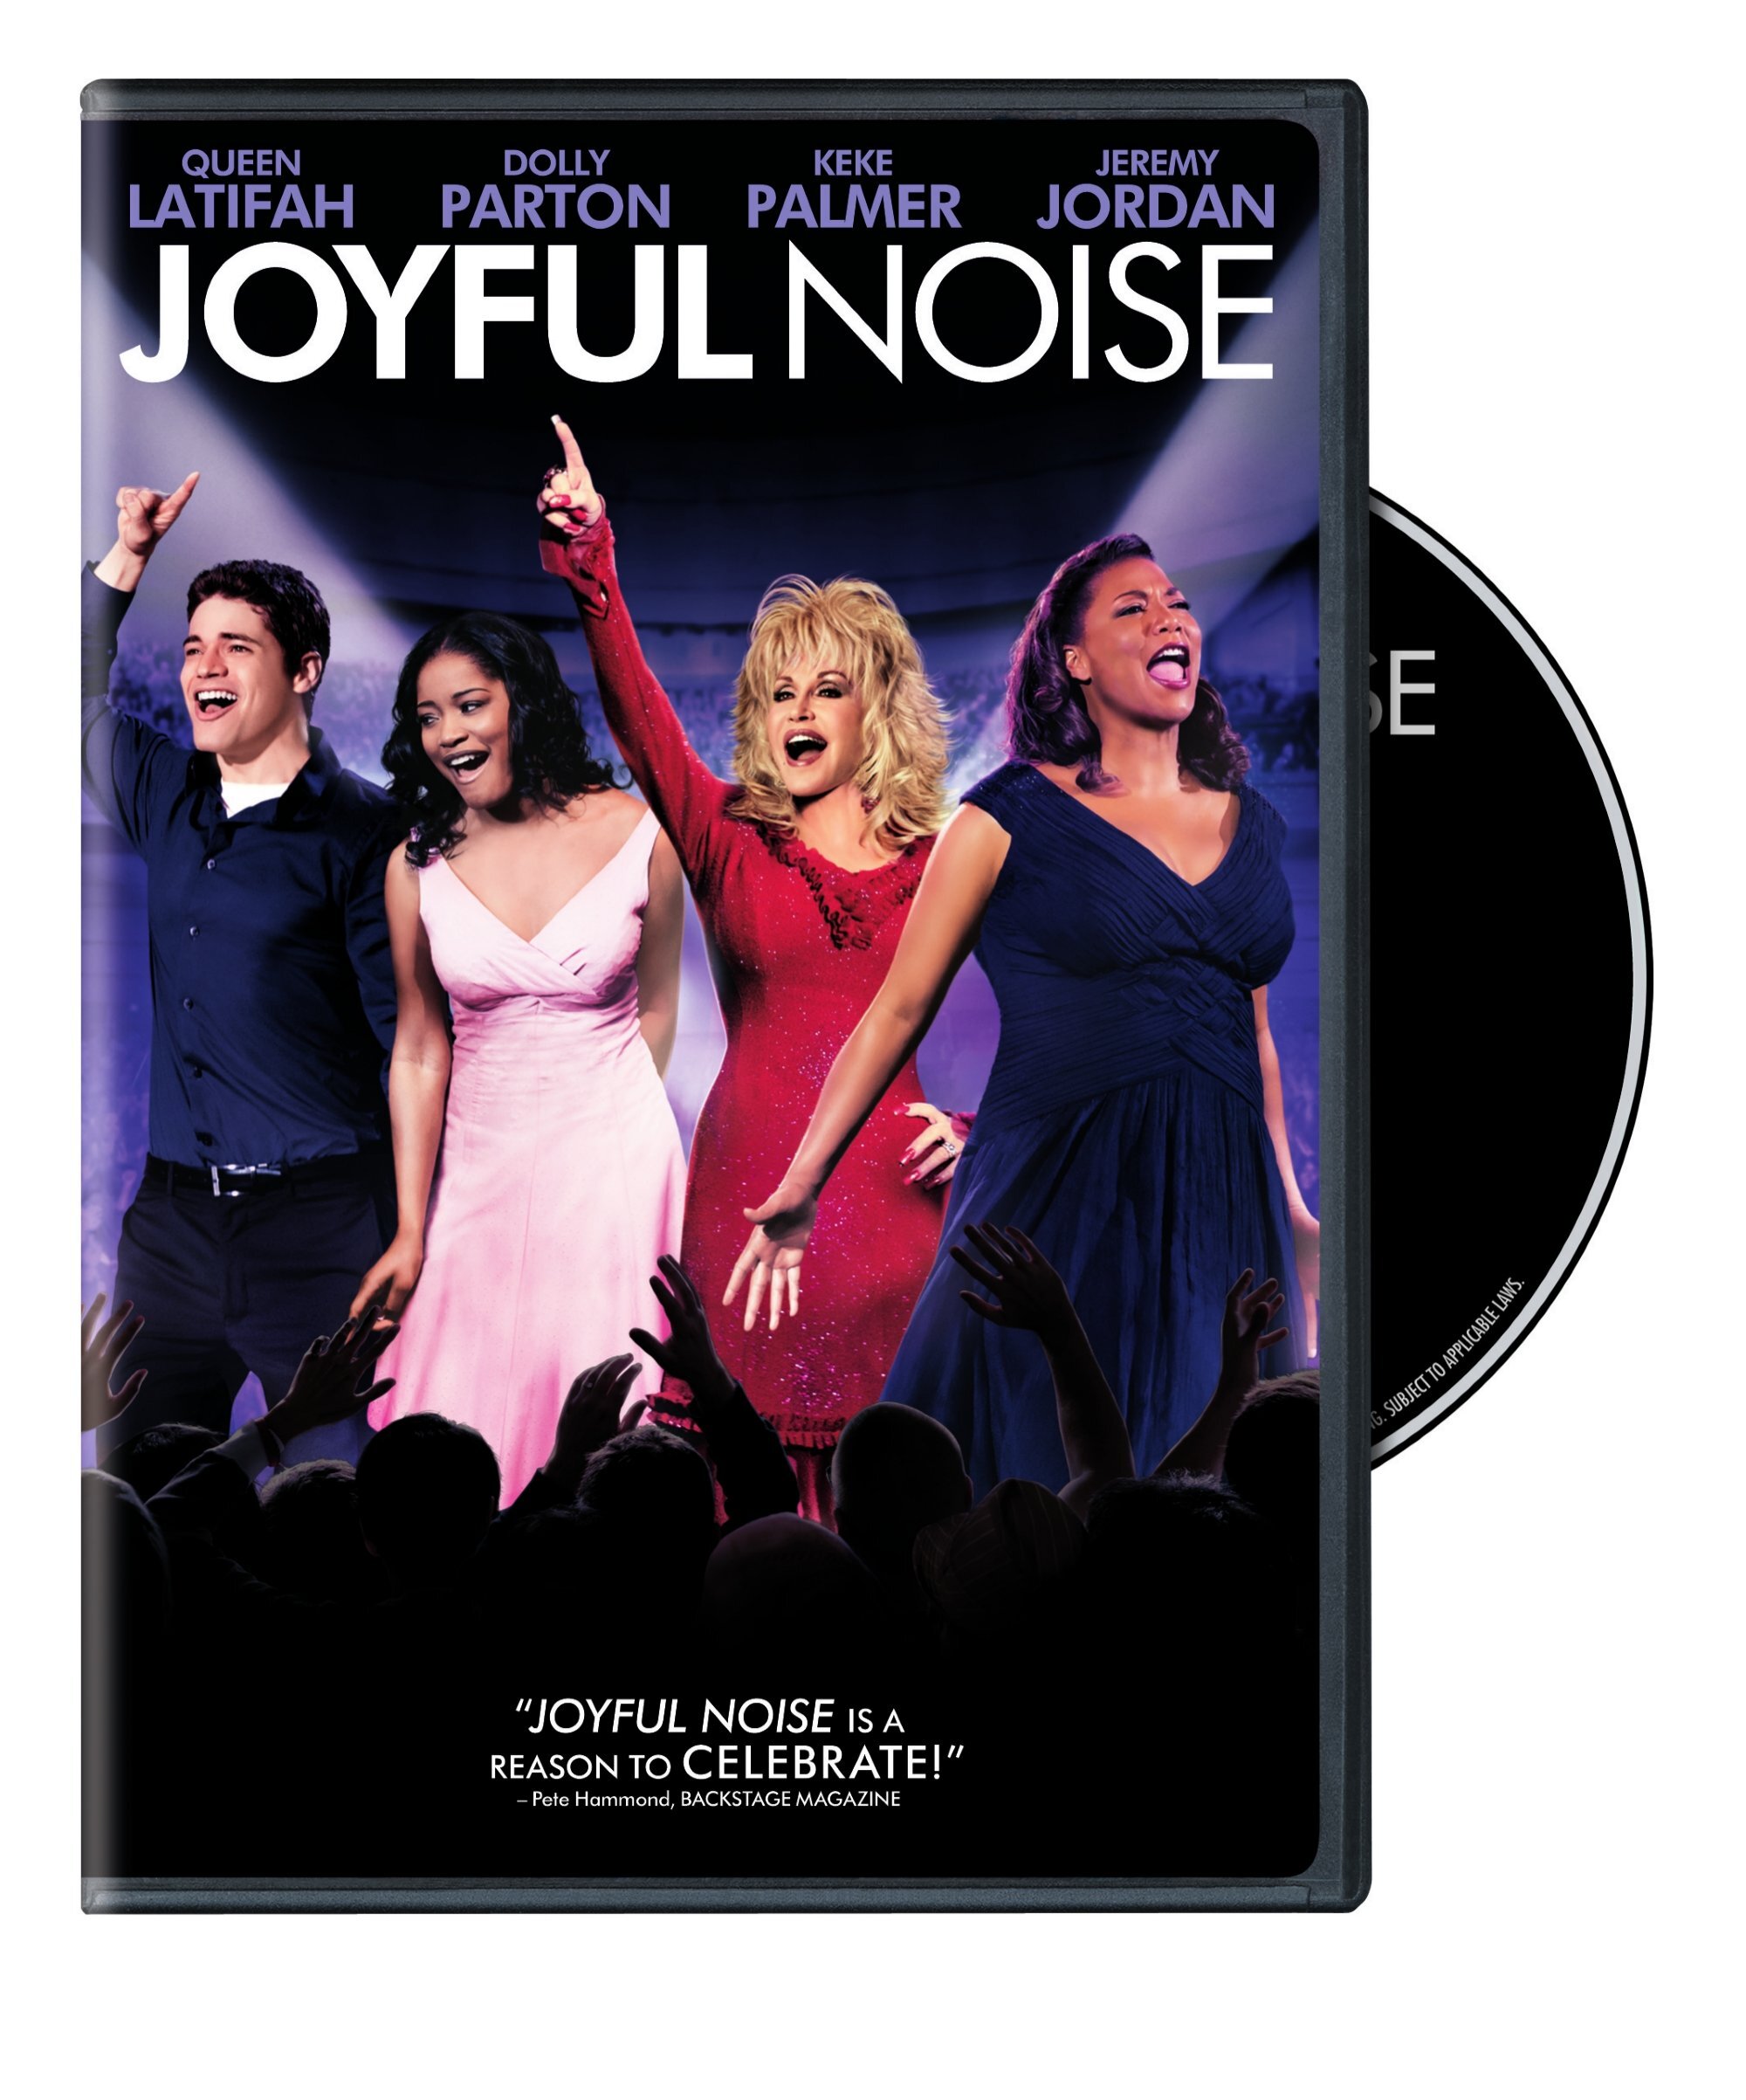 Joyful Noise - DVD [ 2012 ]  - Comedy Movies On DVD - Movies On GRUV